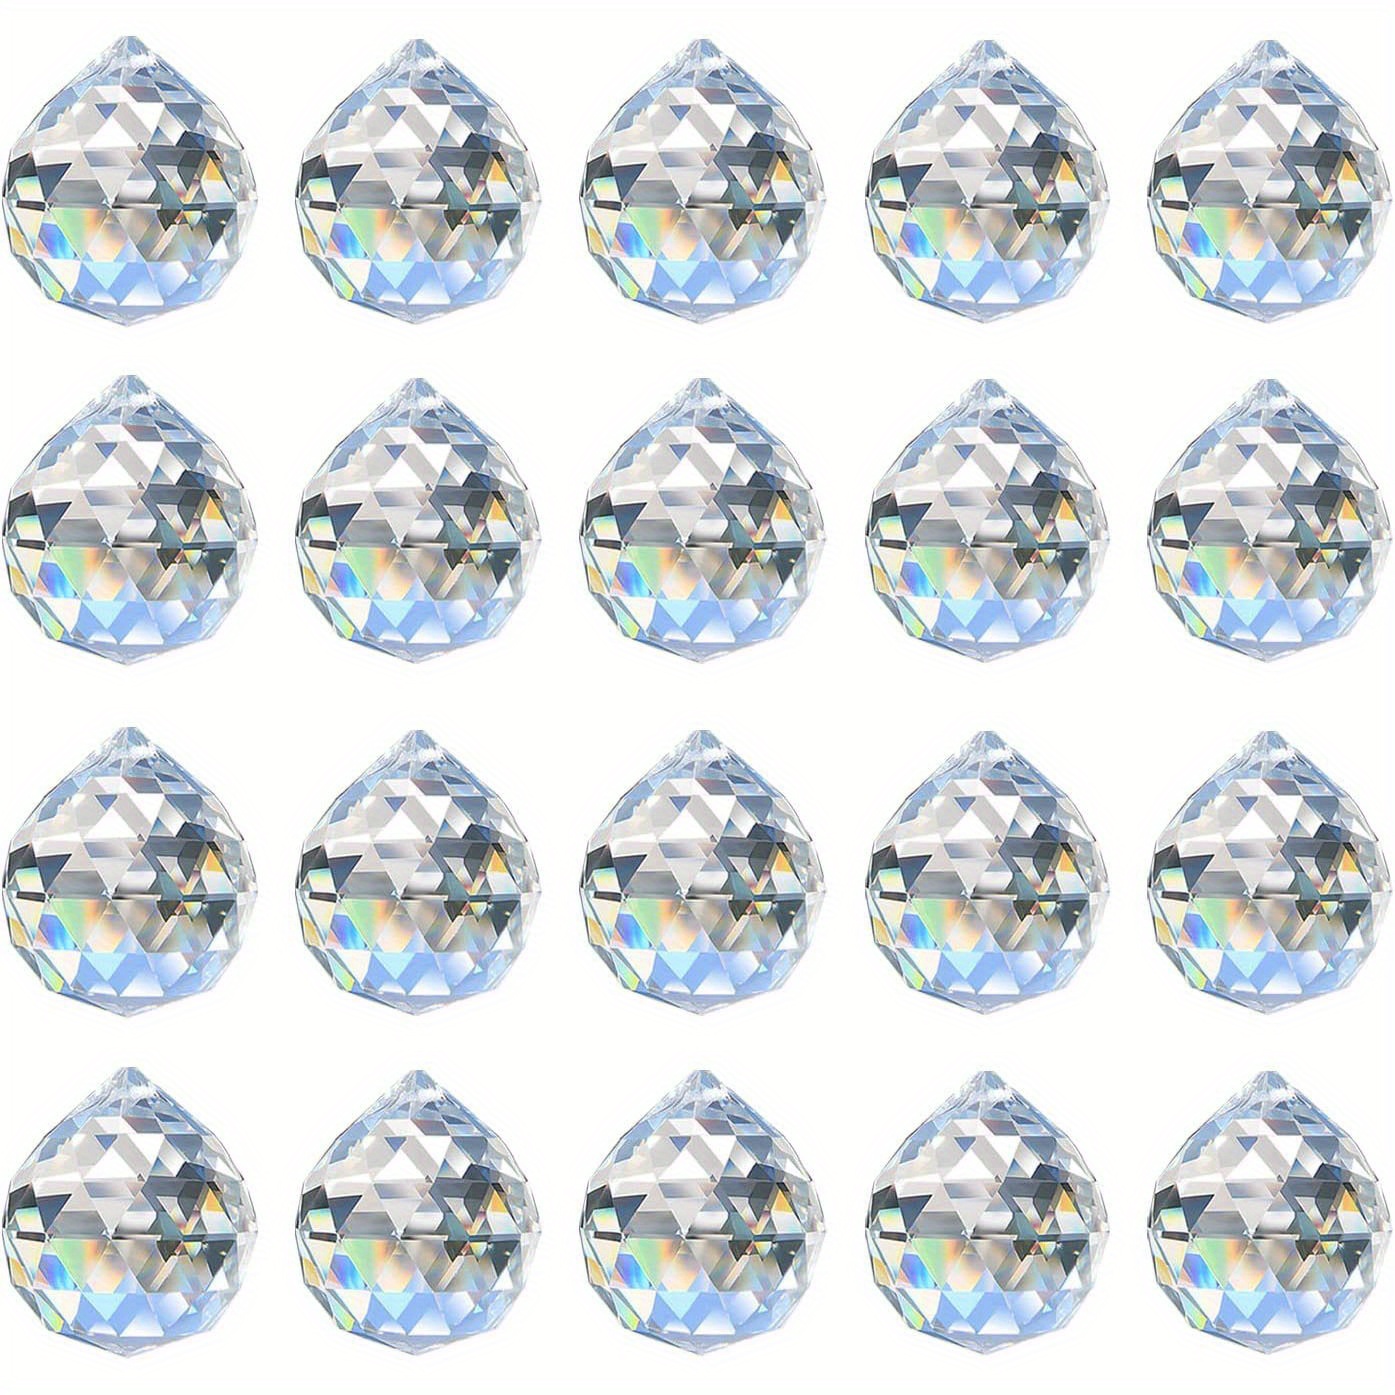 

Crystal Suncatcher Prisms 20mm Clear Hanging Crystal Ball Prism Suncatcher Rainbow Maker For Windows, Feng Shui, Gifts - Set Of 10